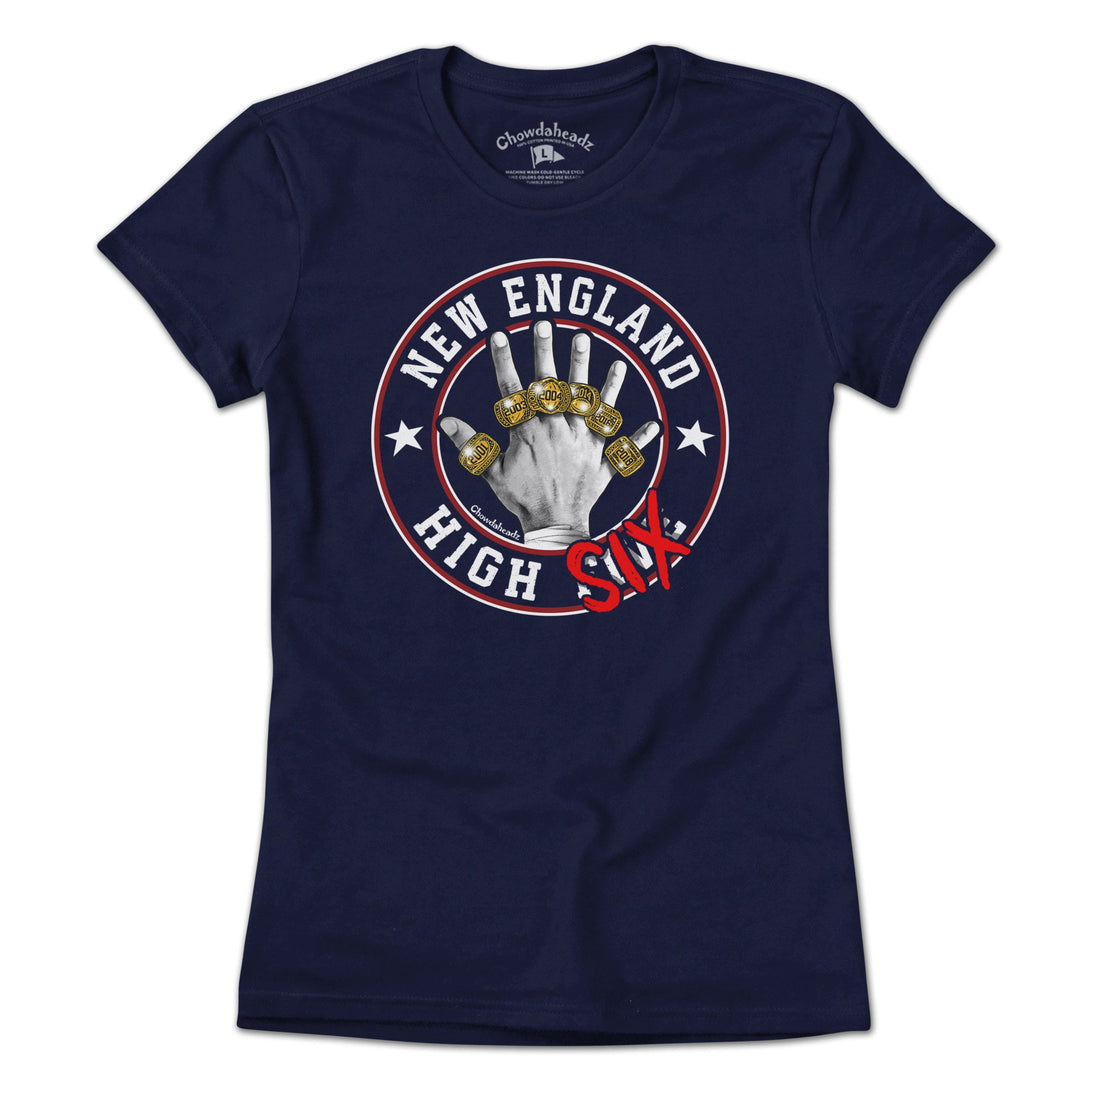 New England High Six T-Shirt - Chowdaheadz